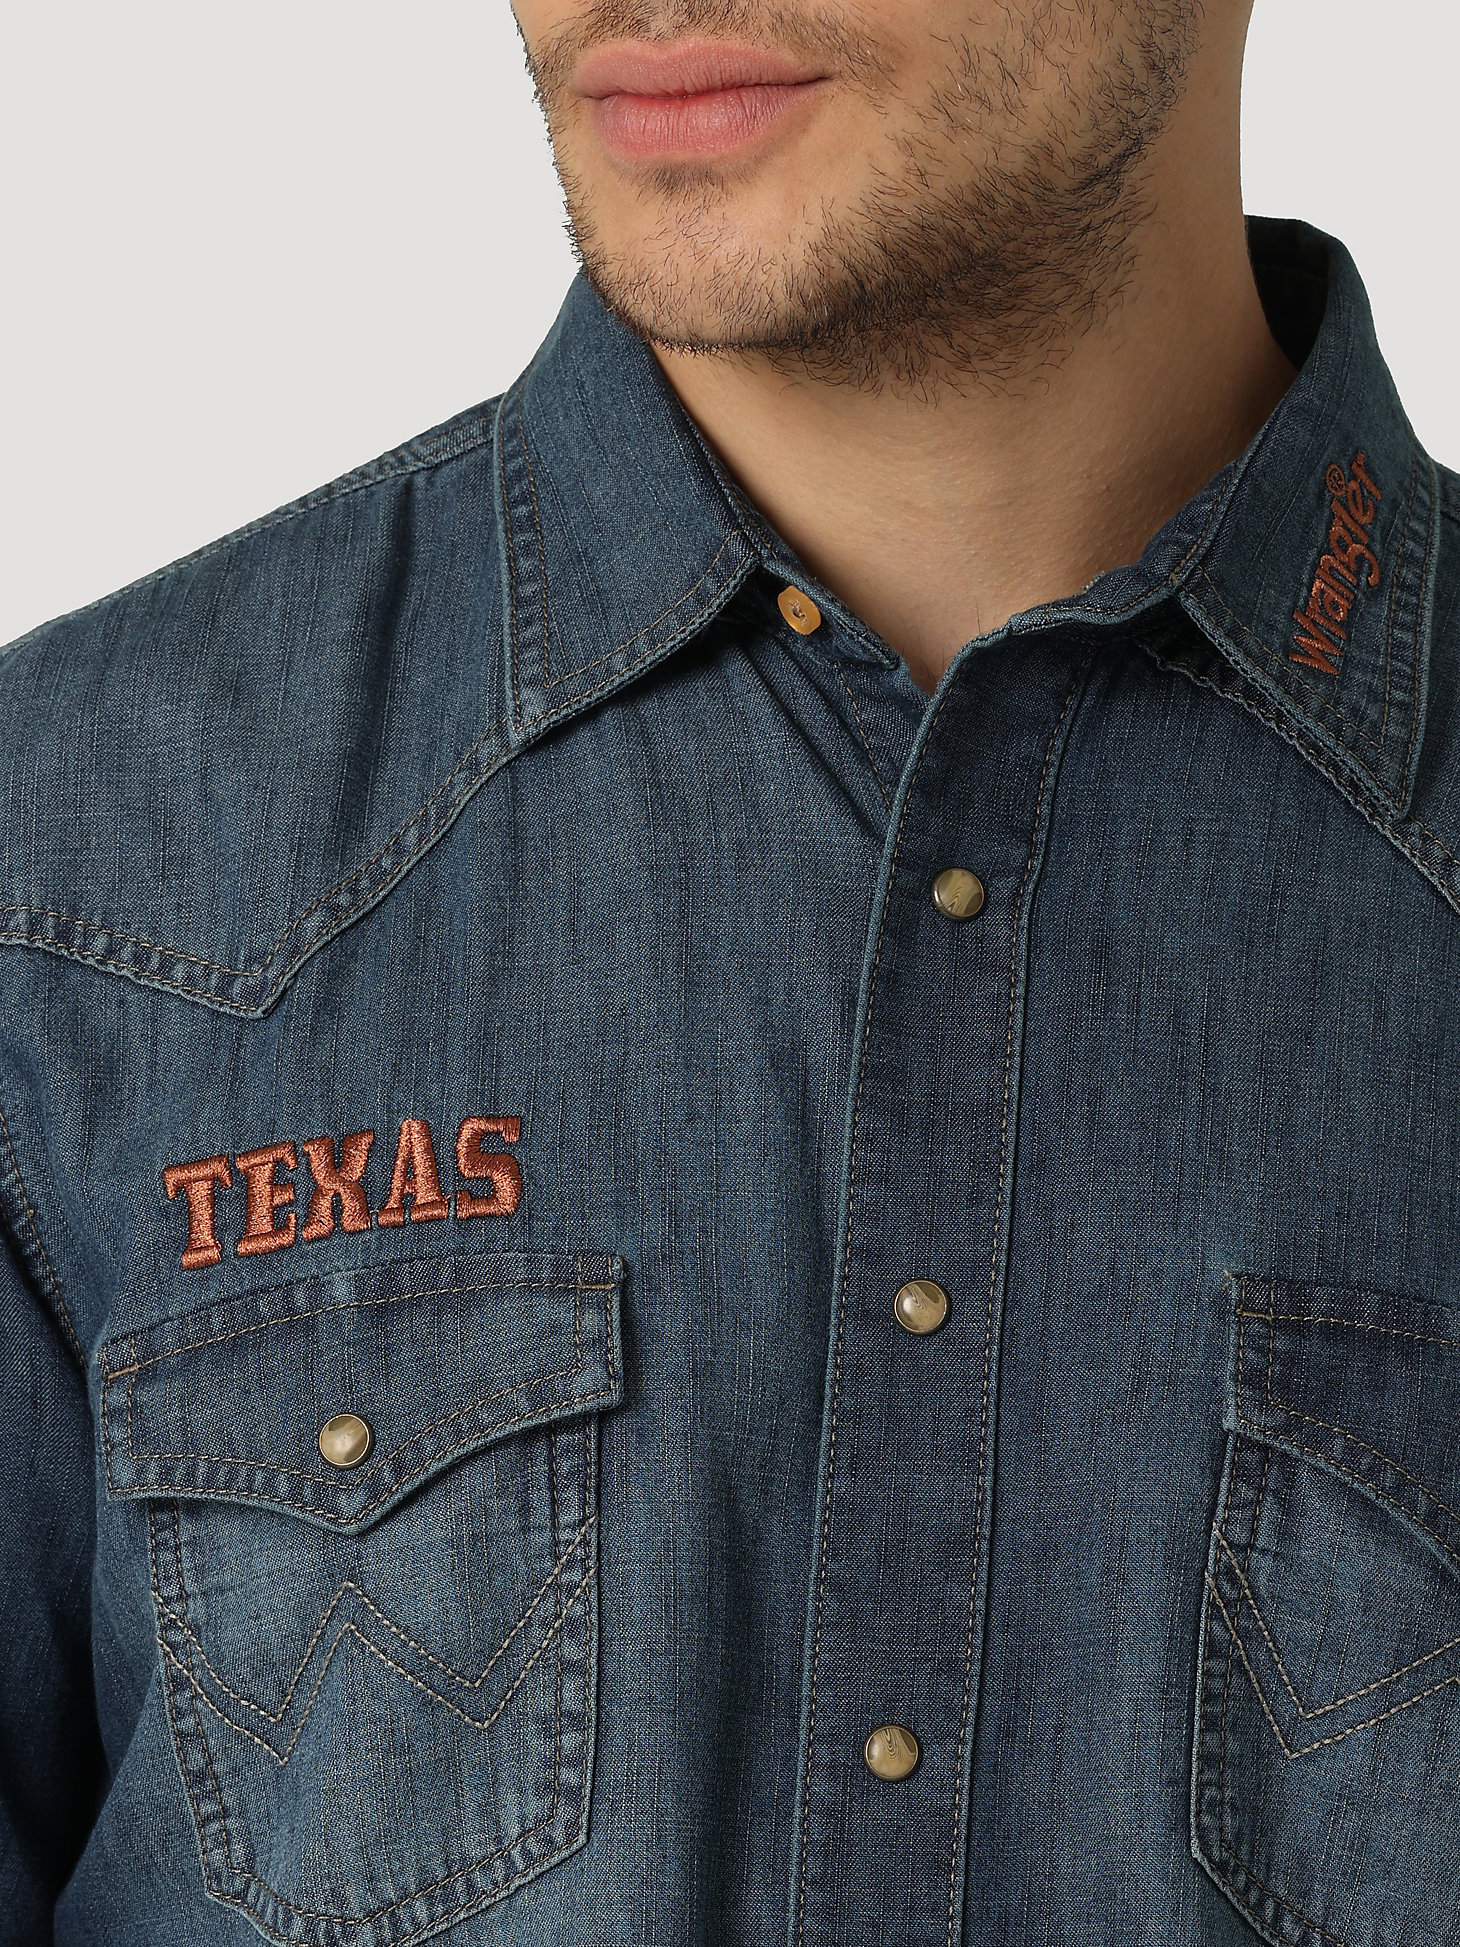 Men's Wrangler Collegiate Denim Western Snap Shirt in University of Texas alternative view 4